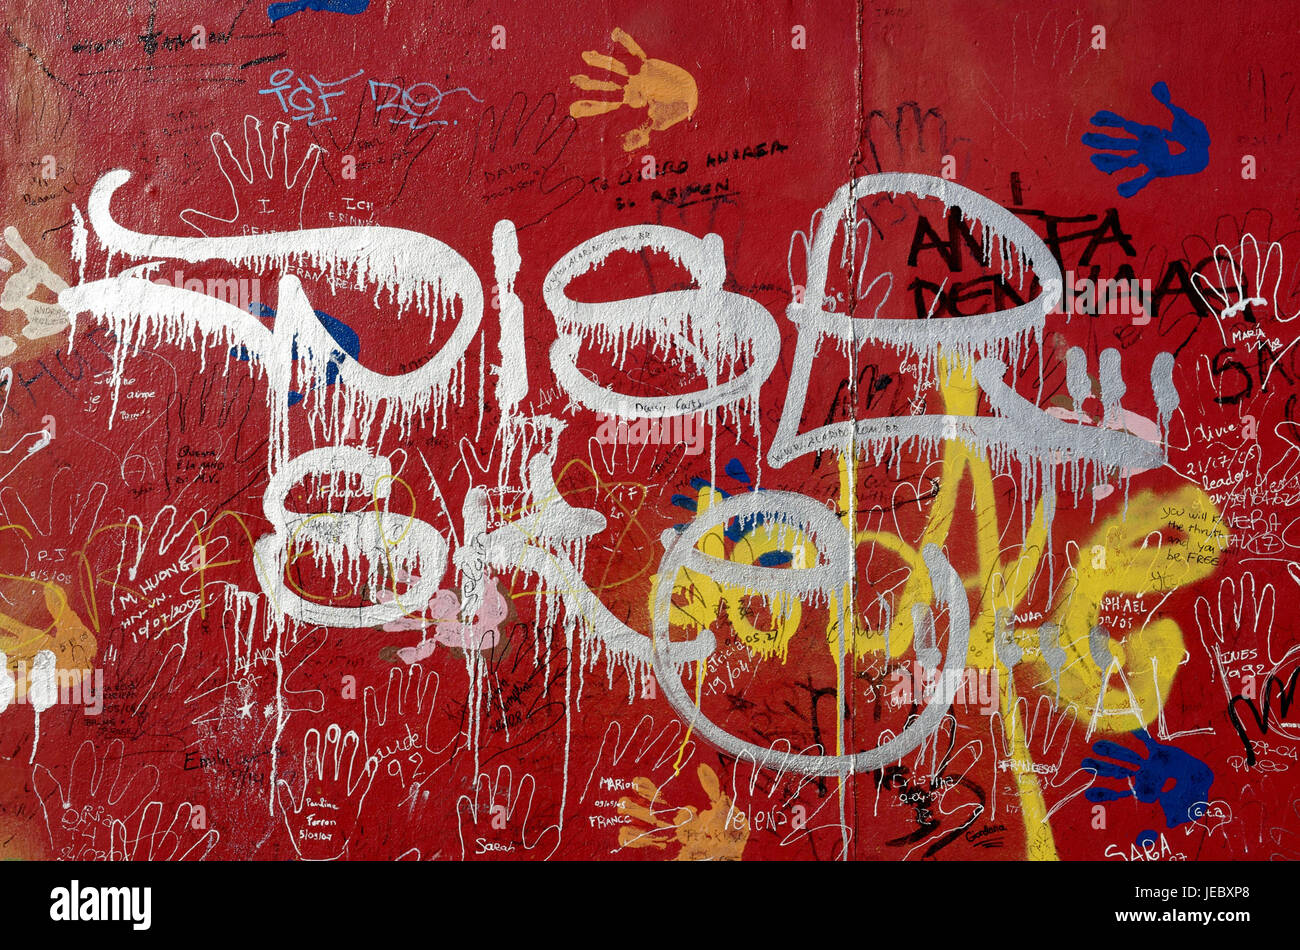 Alemania, Berlín Friedrich's Grove, el graffiti en el muro de Berlín, Foto de stock